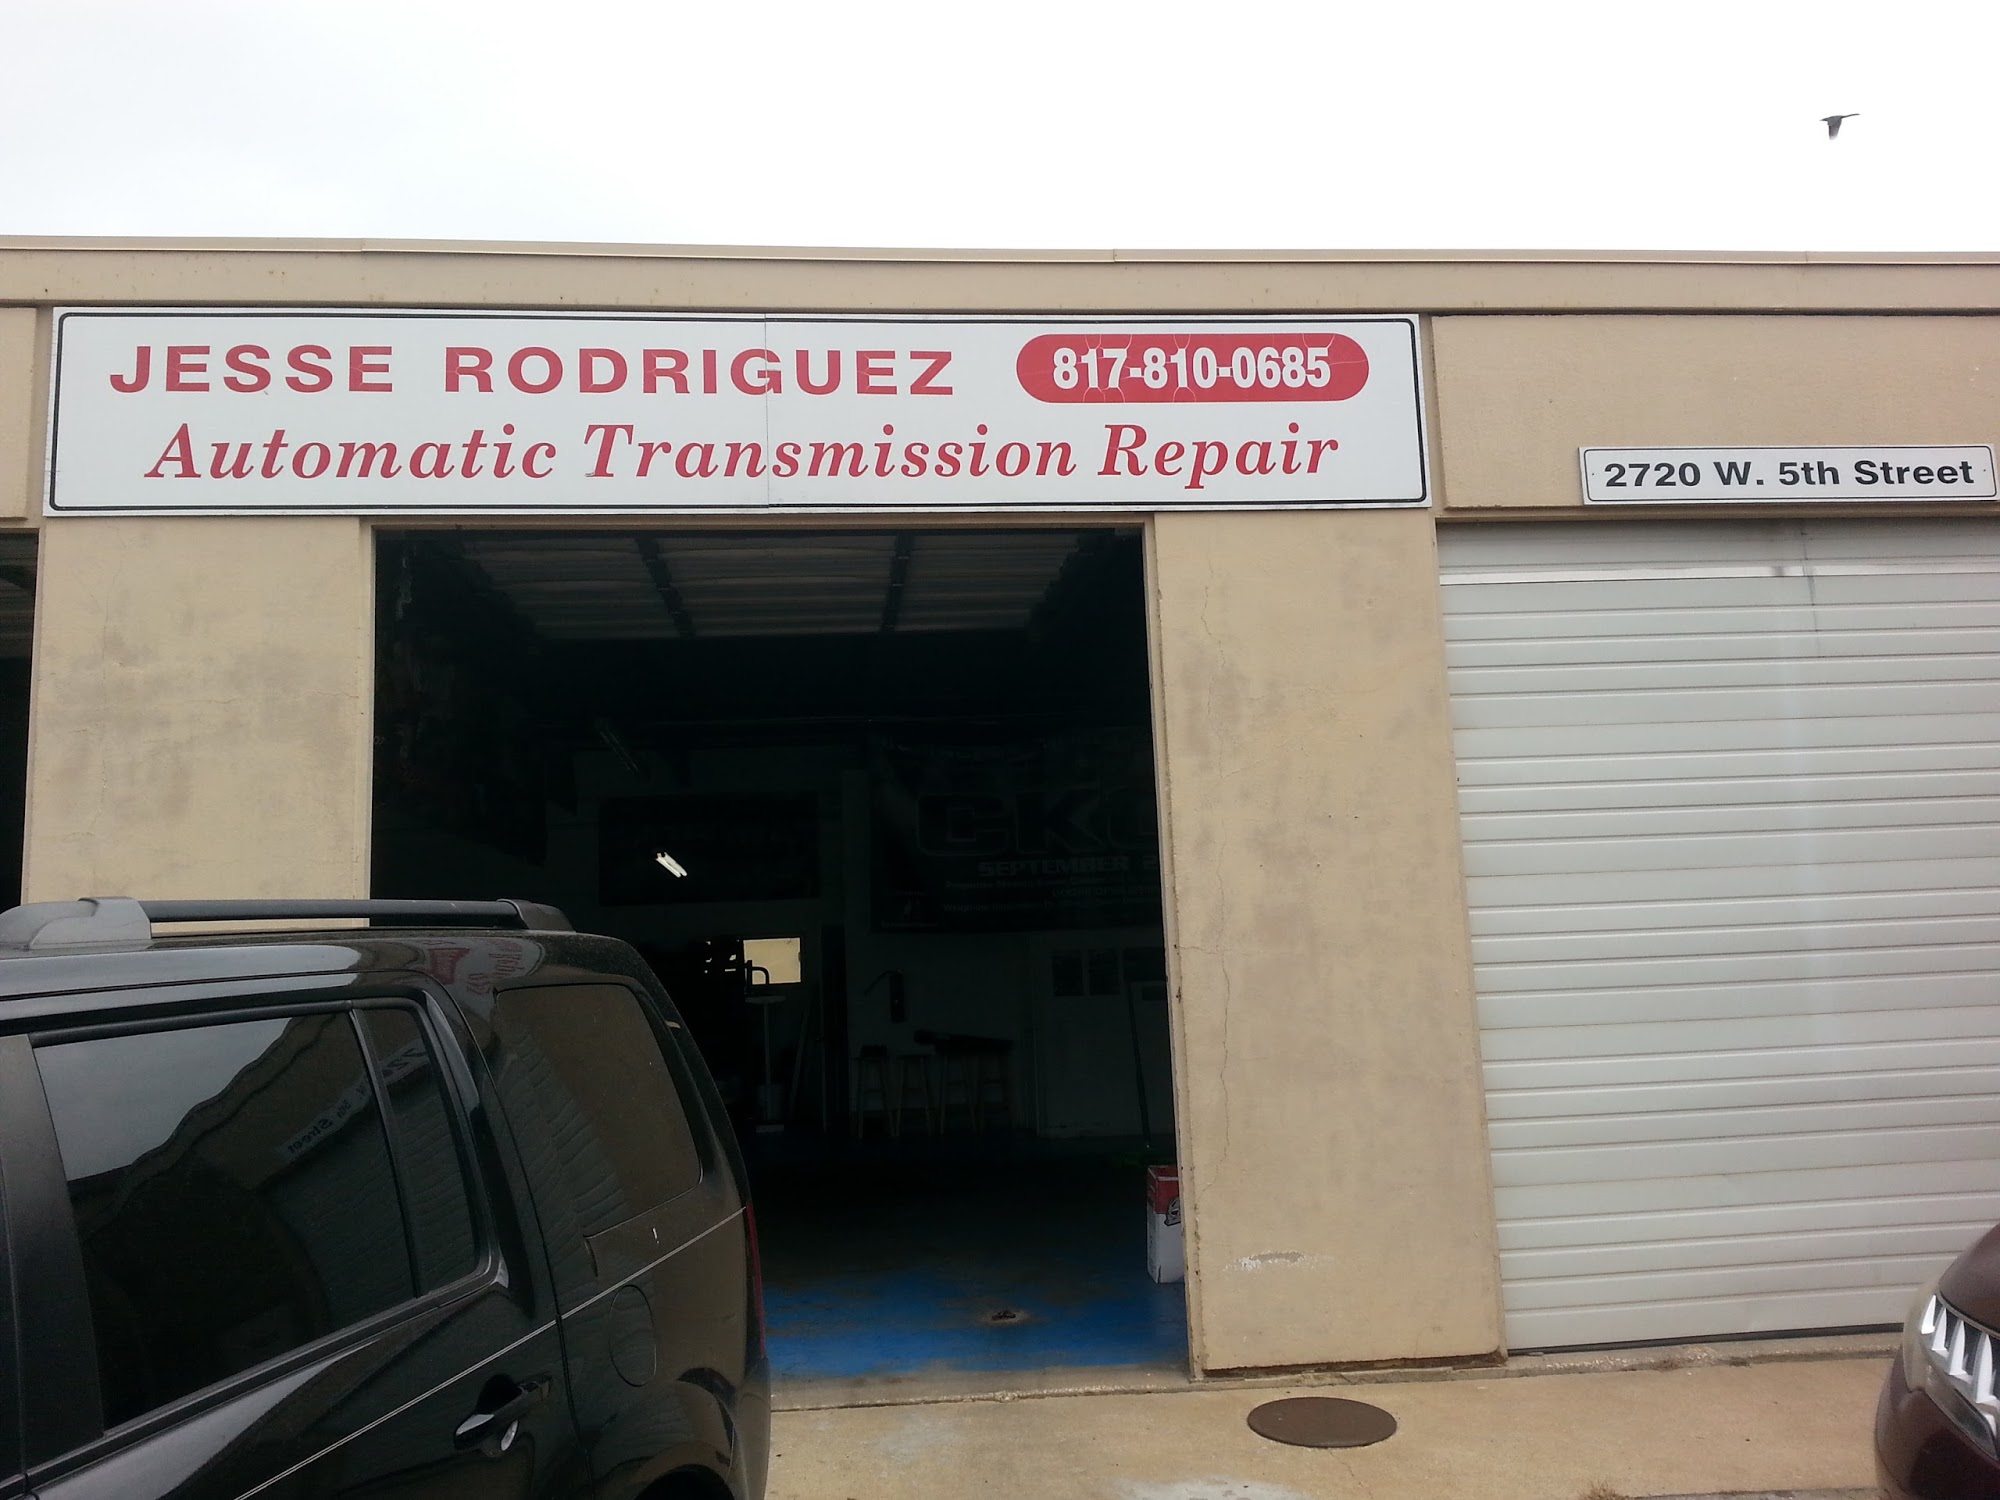 Jesse Rodriguez Automatic Transmission Repair